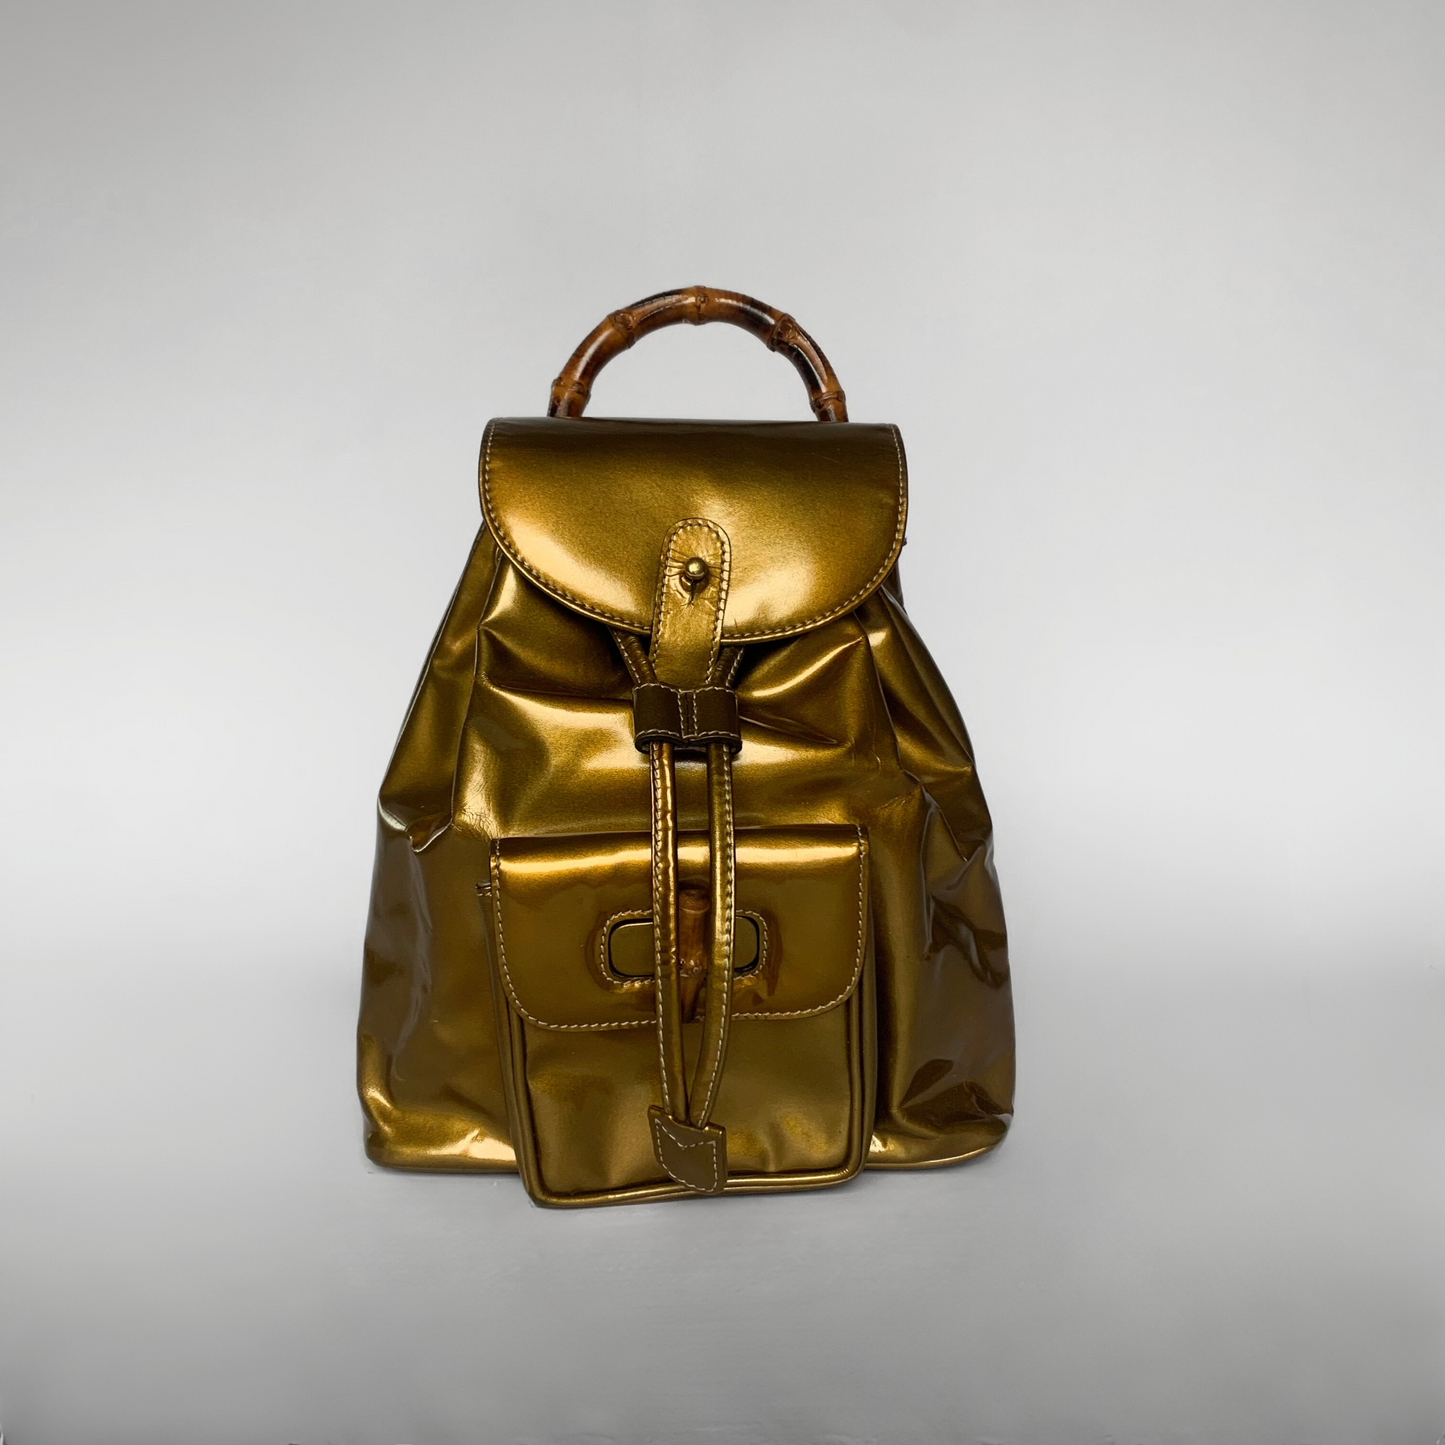 Gucci Gucci Bambus ryggsekk liten emalje skinn - ryggsekker - Etoile Luxury Vintage